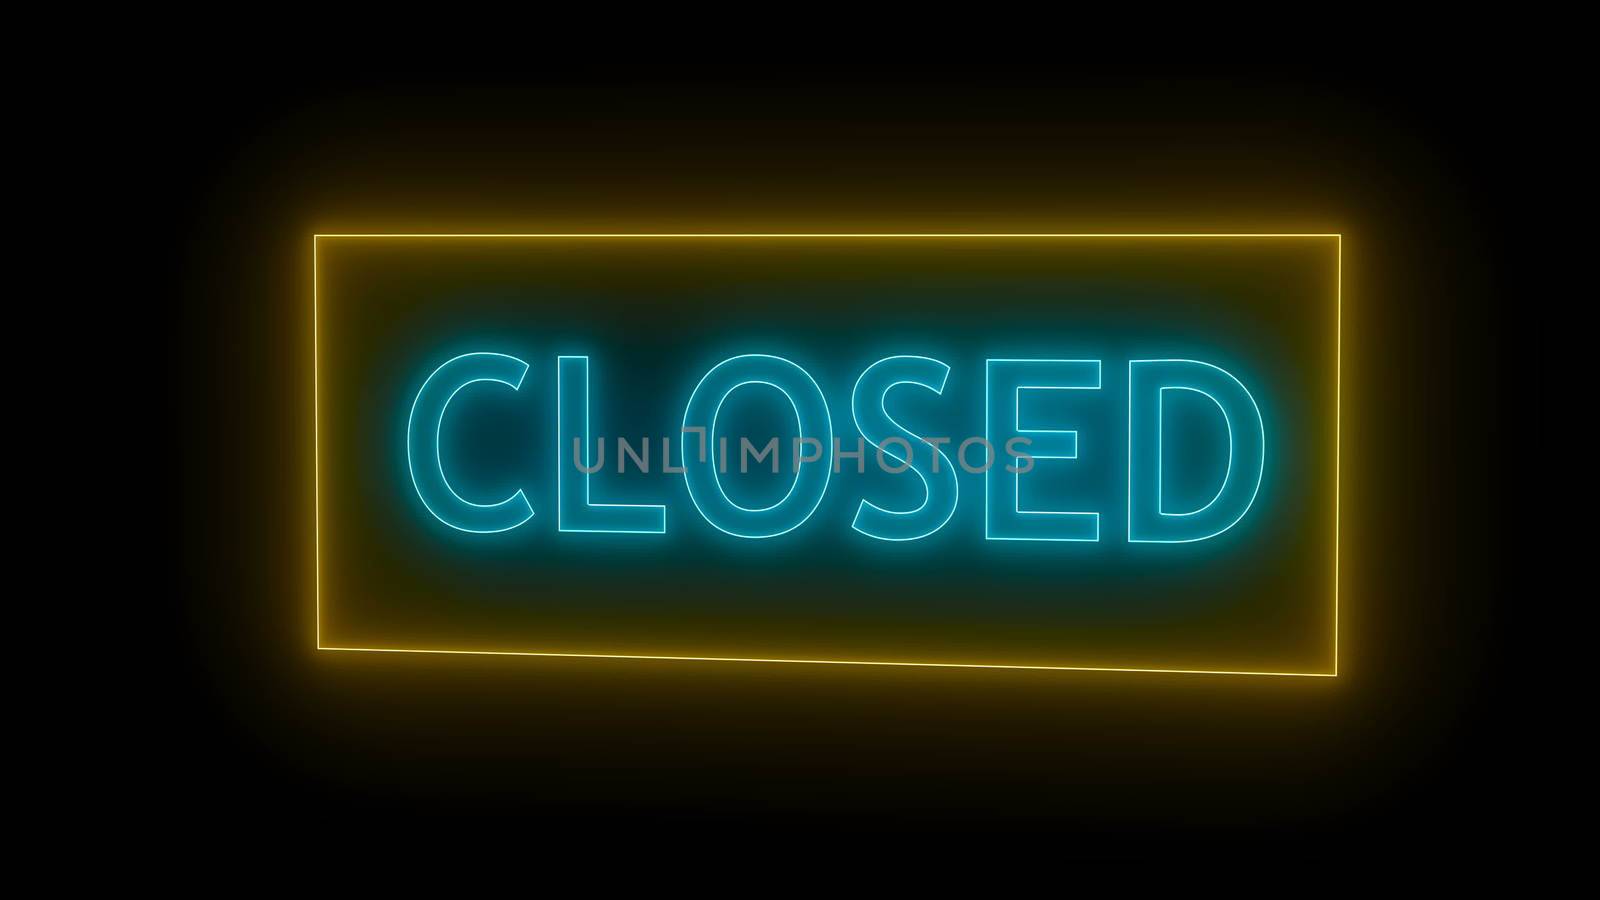 Closed neon sign. Digital illustration. 3d rendering